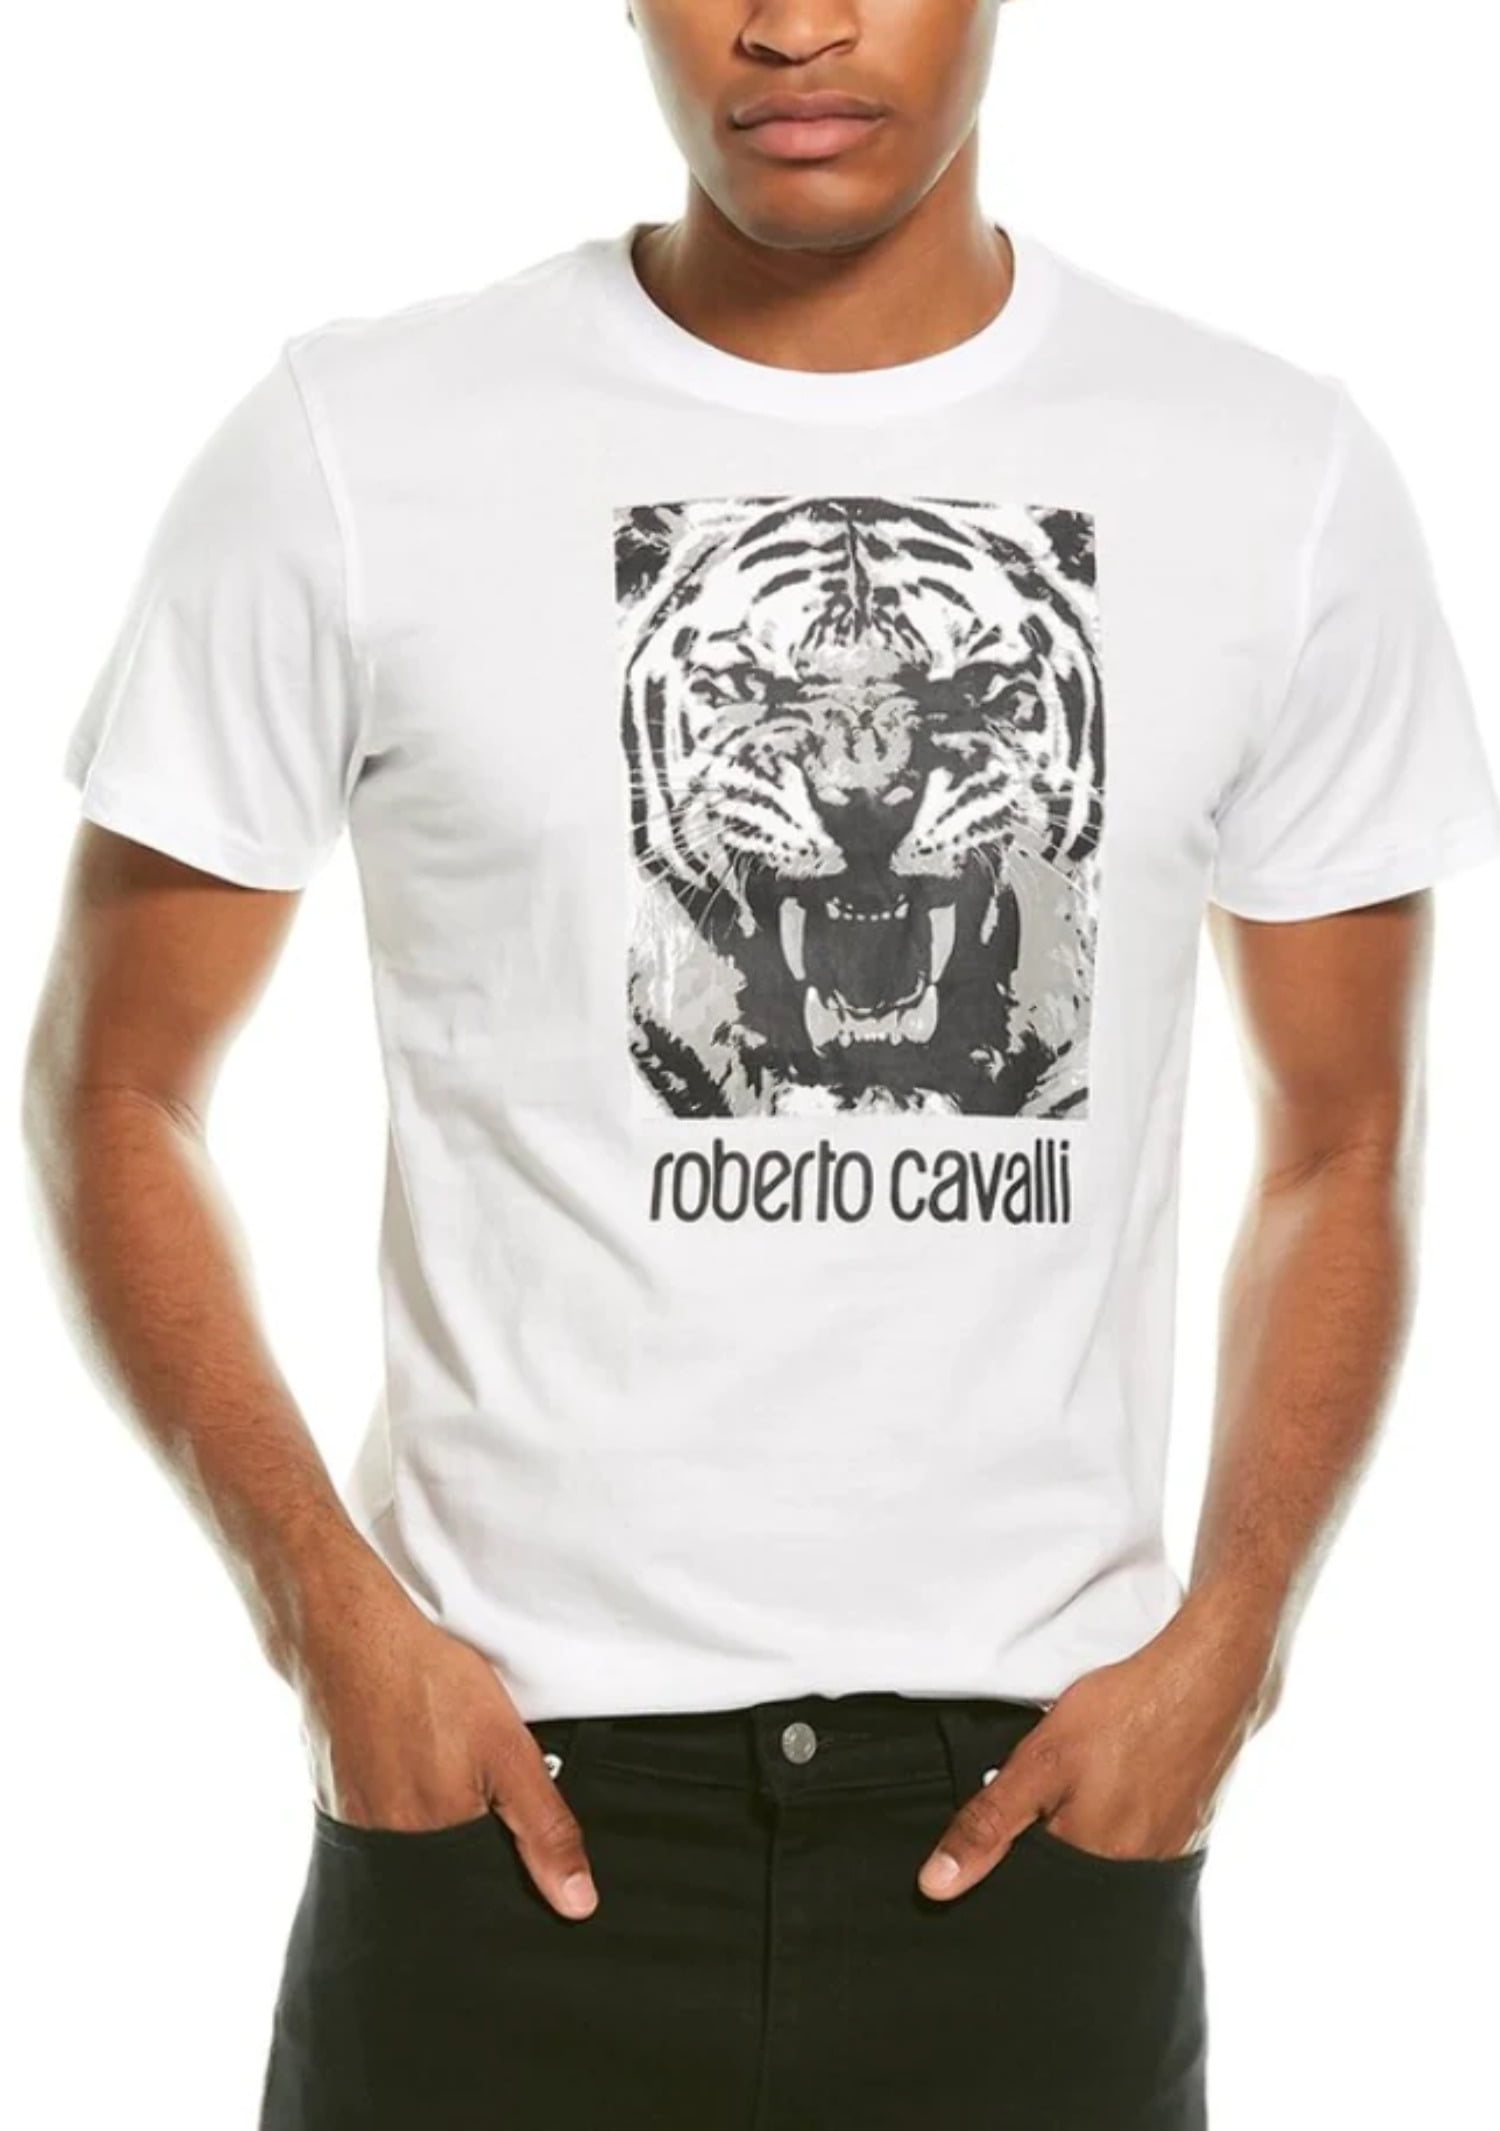 Roberto Cavalli Tiger Graphic Tee - Walmart.com